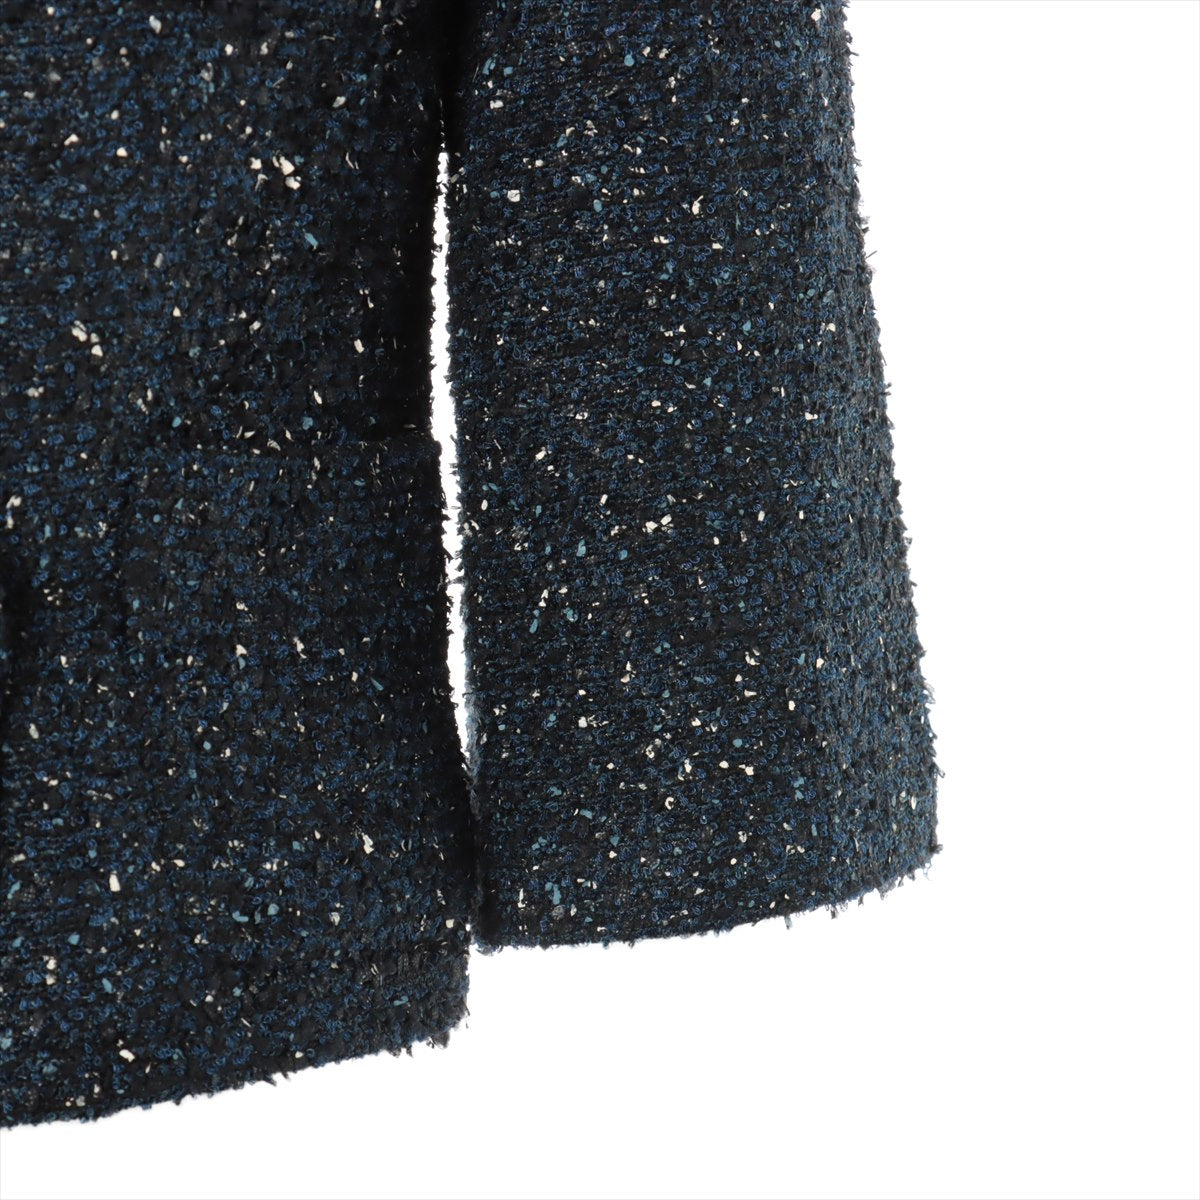 Chanel Coco Mark Tweed Suit jacket 36 Ladies' Navy blue  P43055V31513